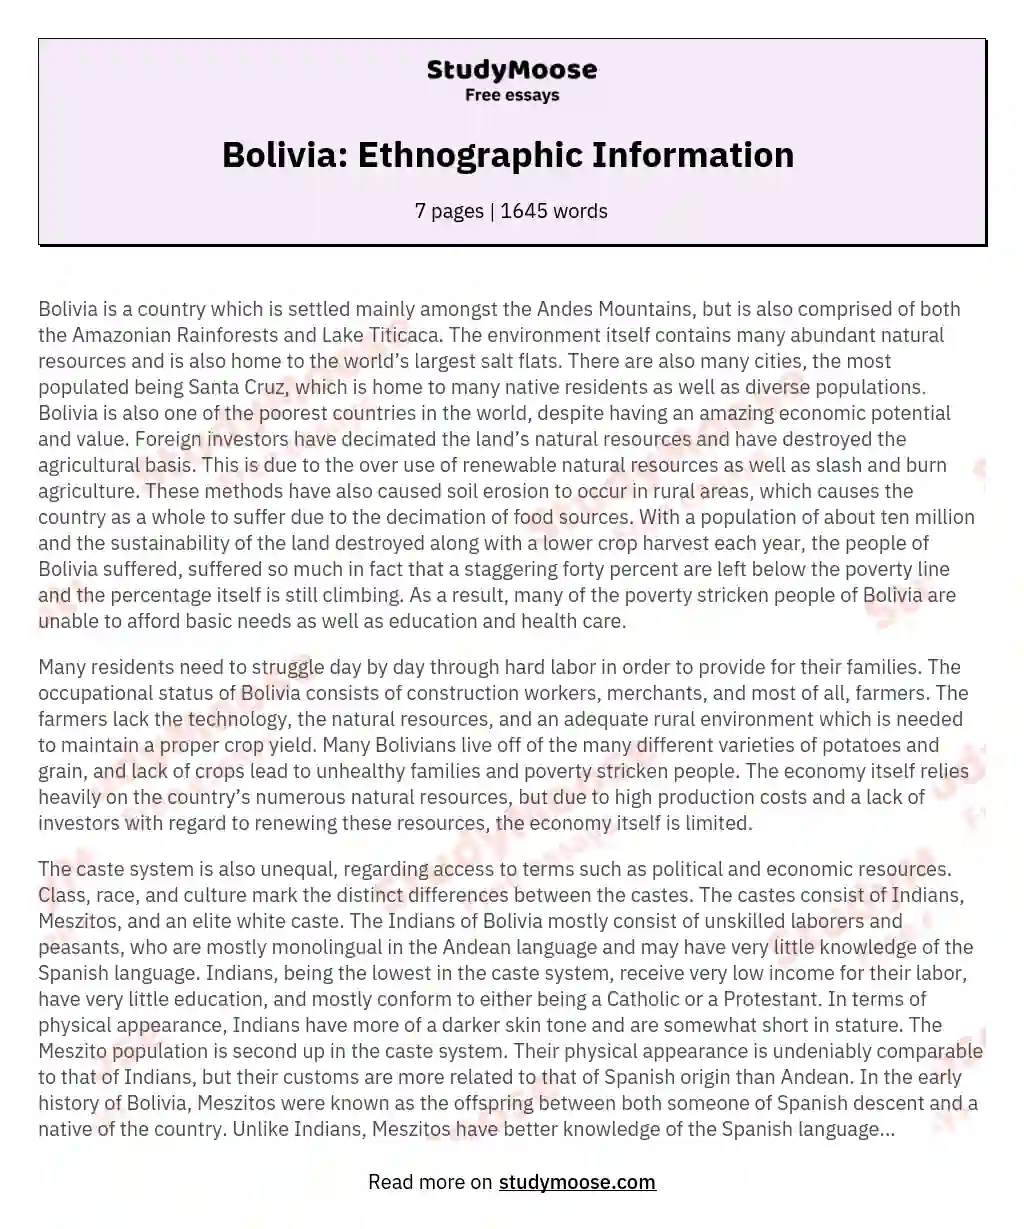 Bolivia: Ethnographic Information  essay